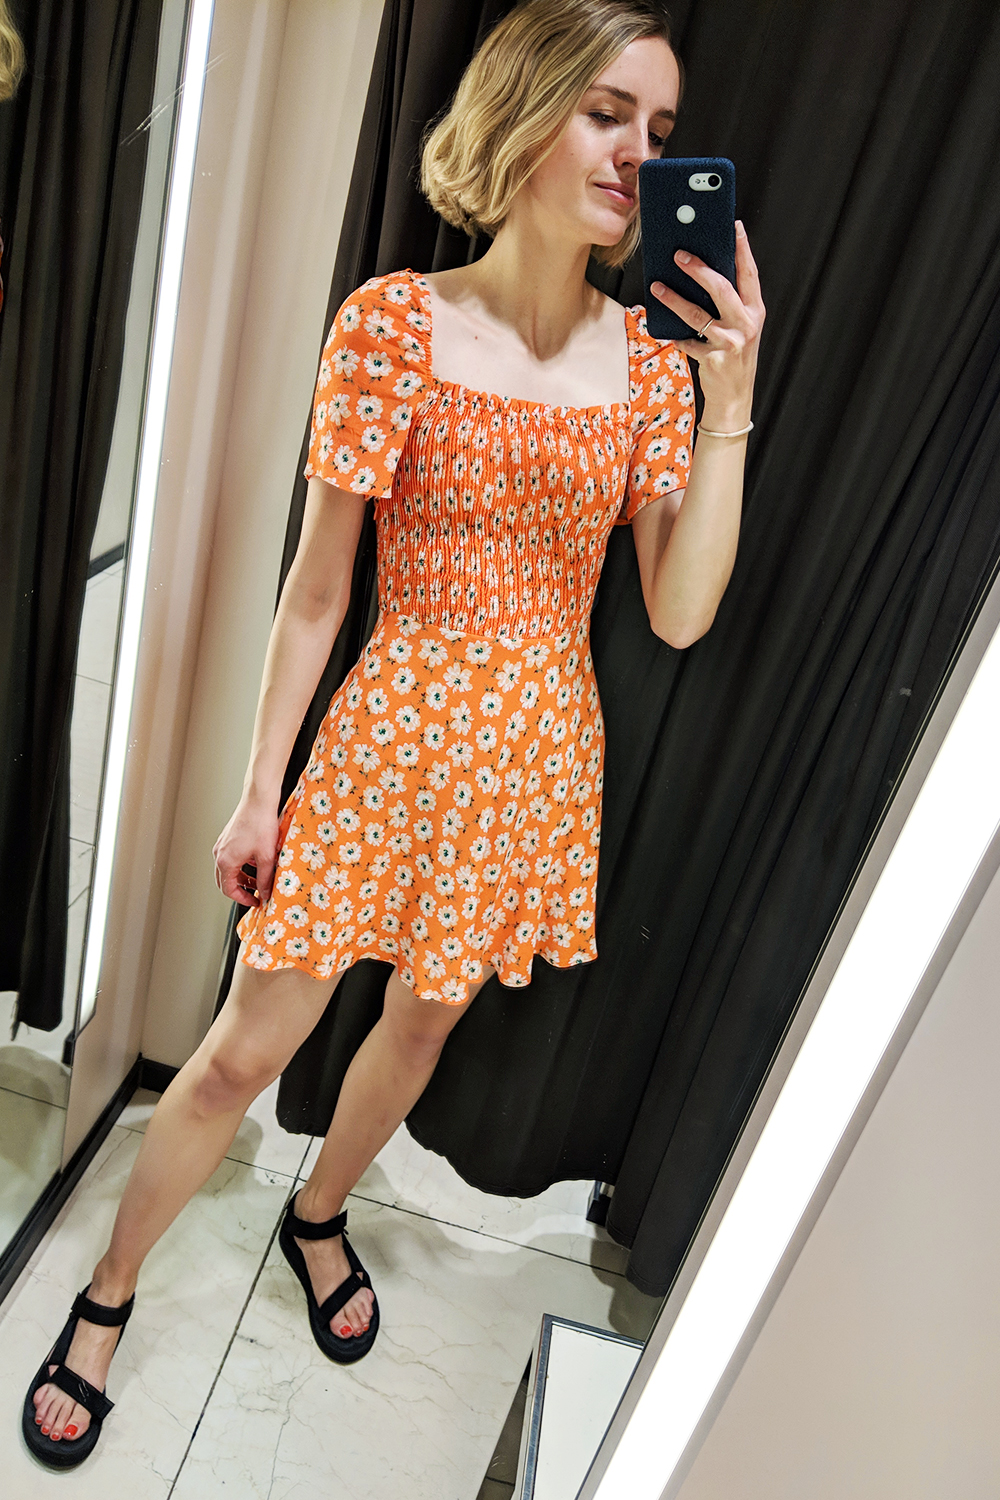 zara orange floral dress cheap online